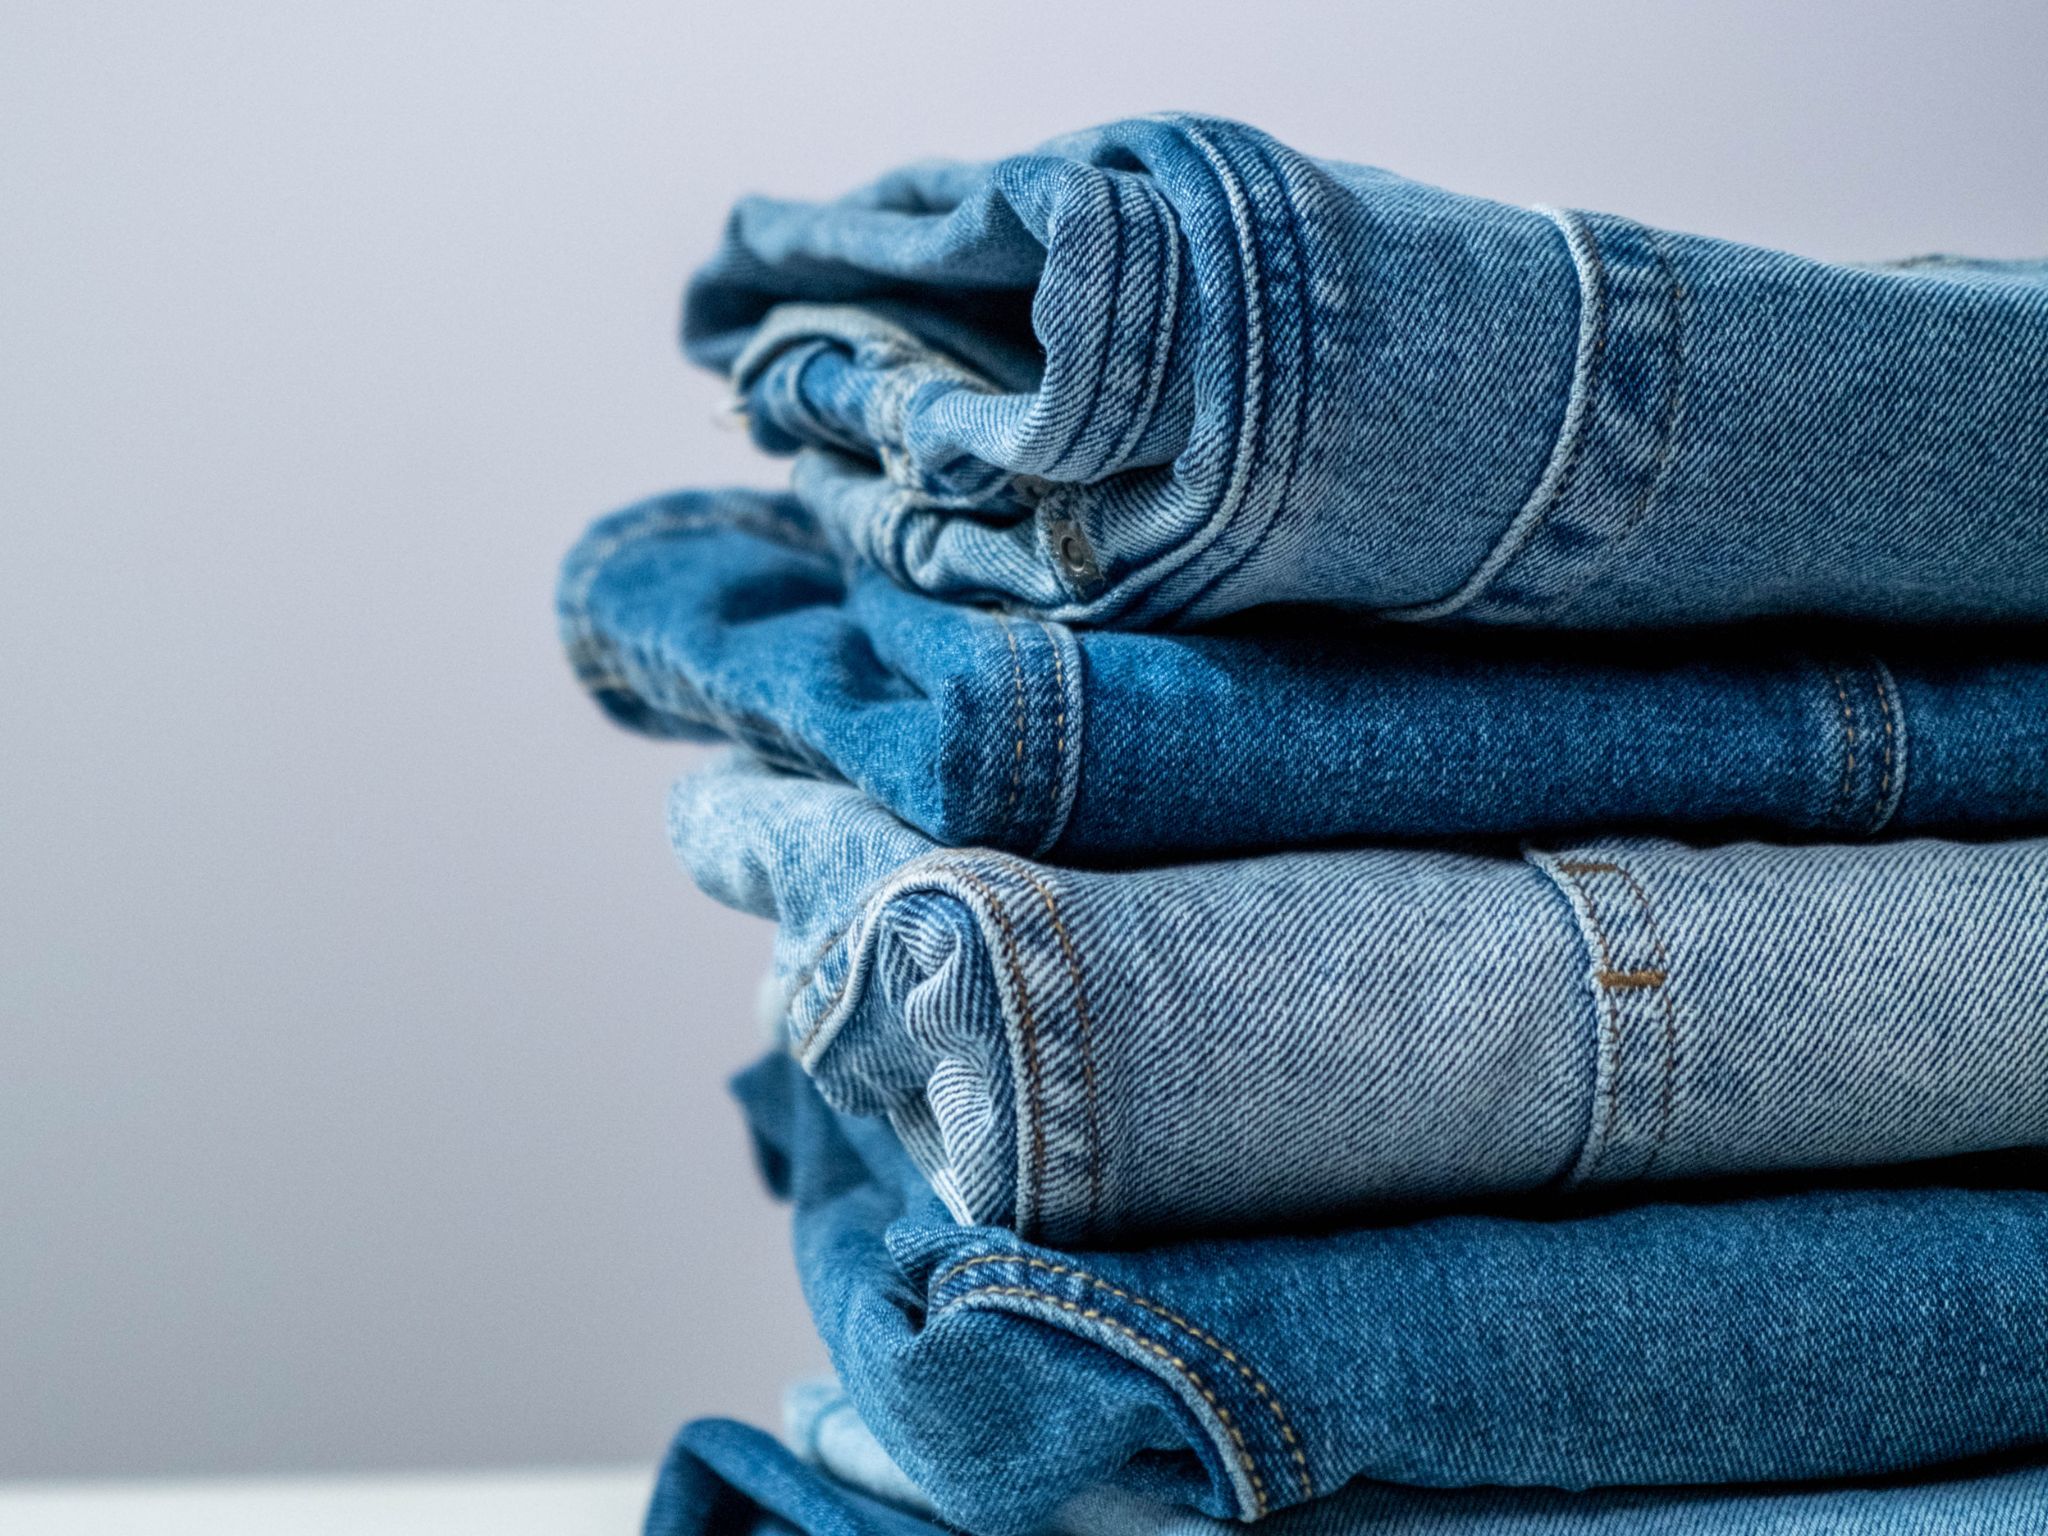 In welke jeans kun jij je dit seizoen vertonen mamazetkoers